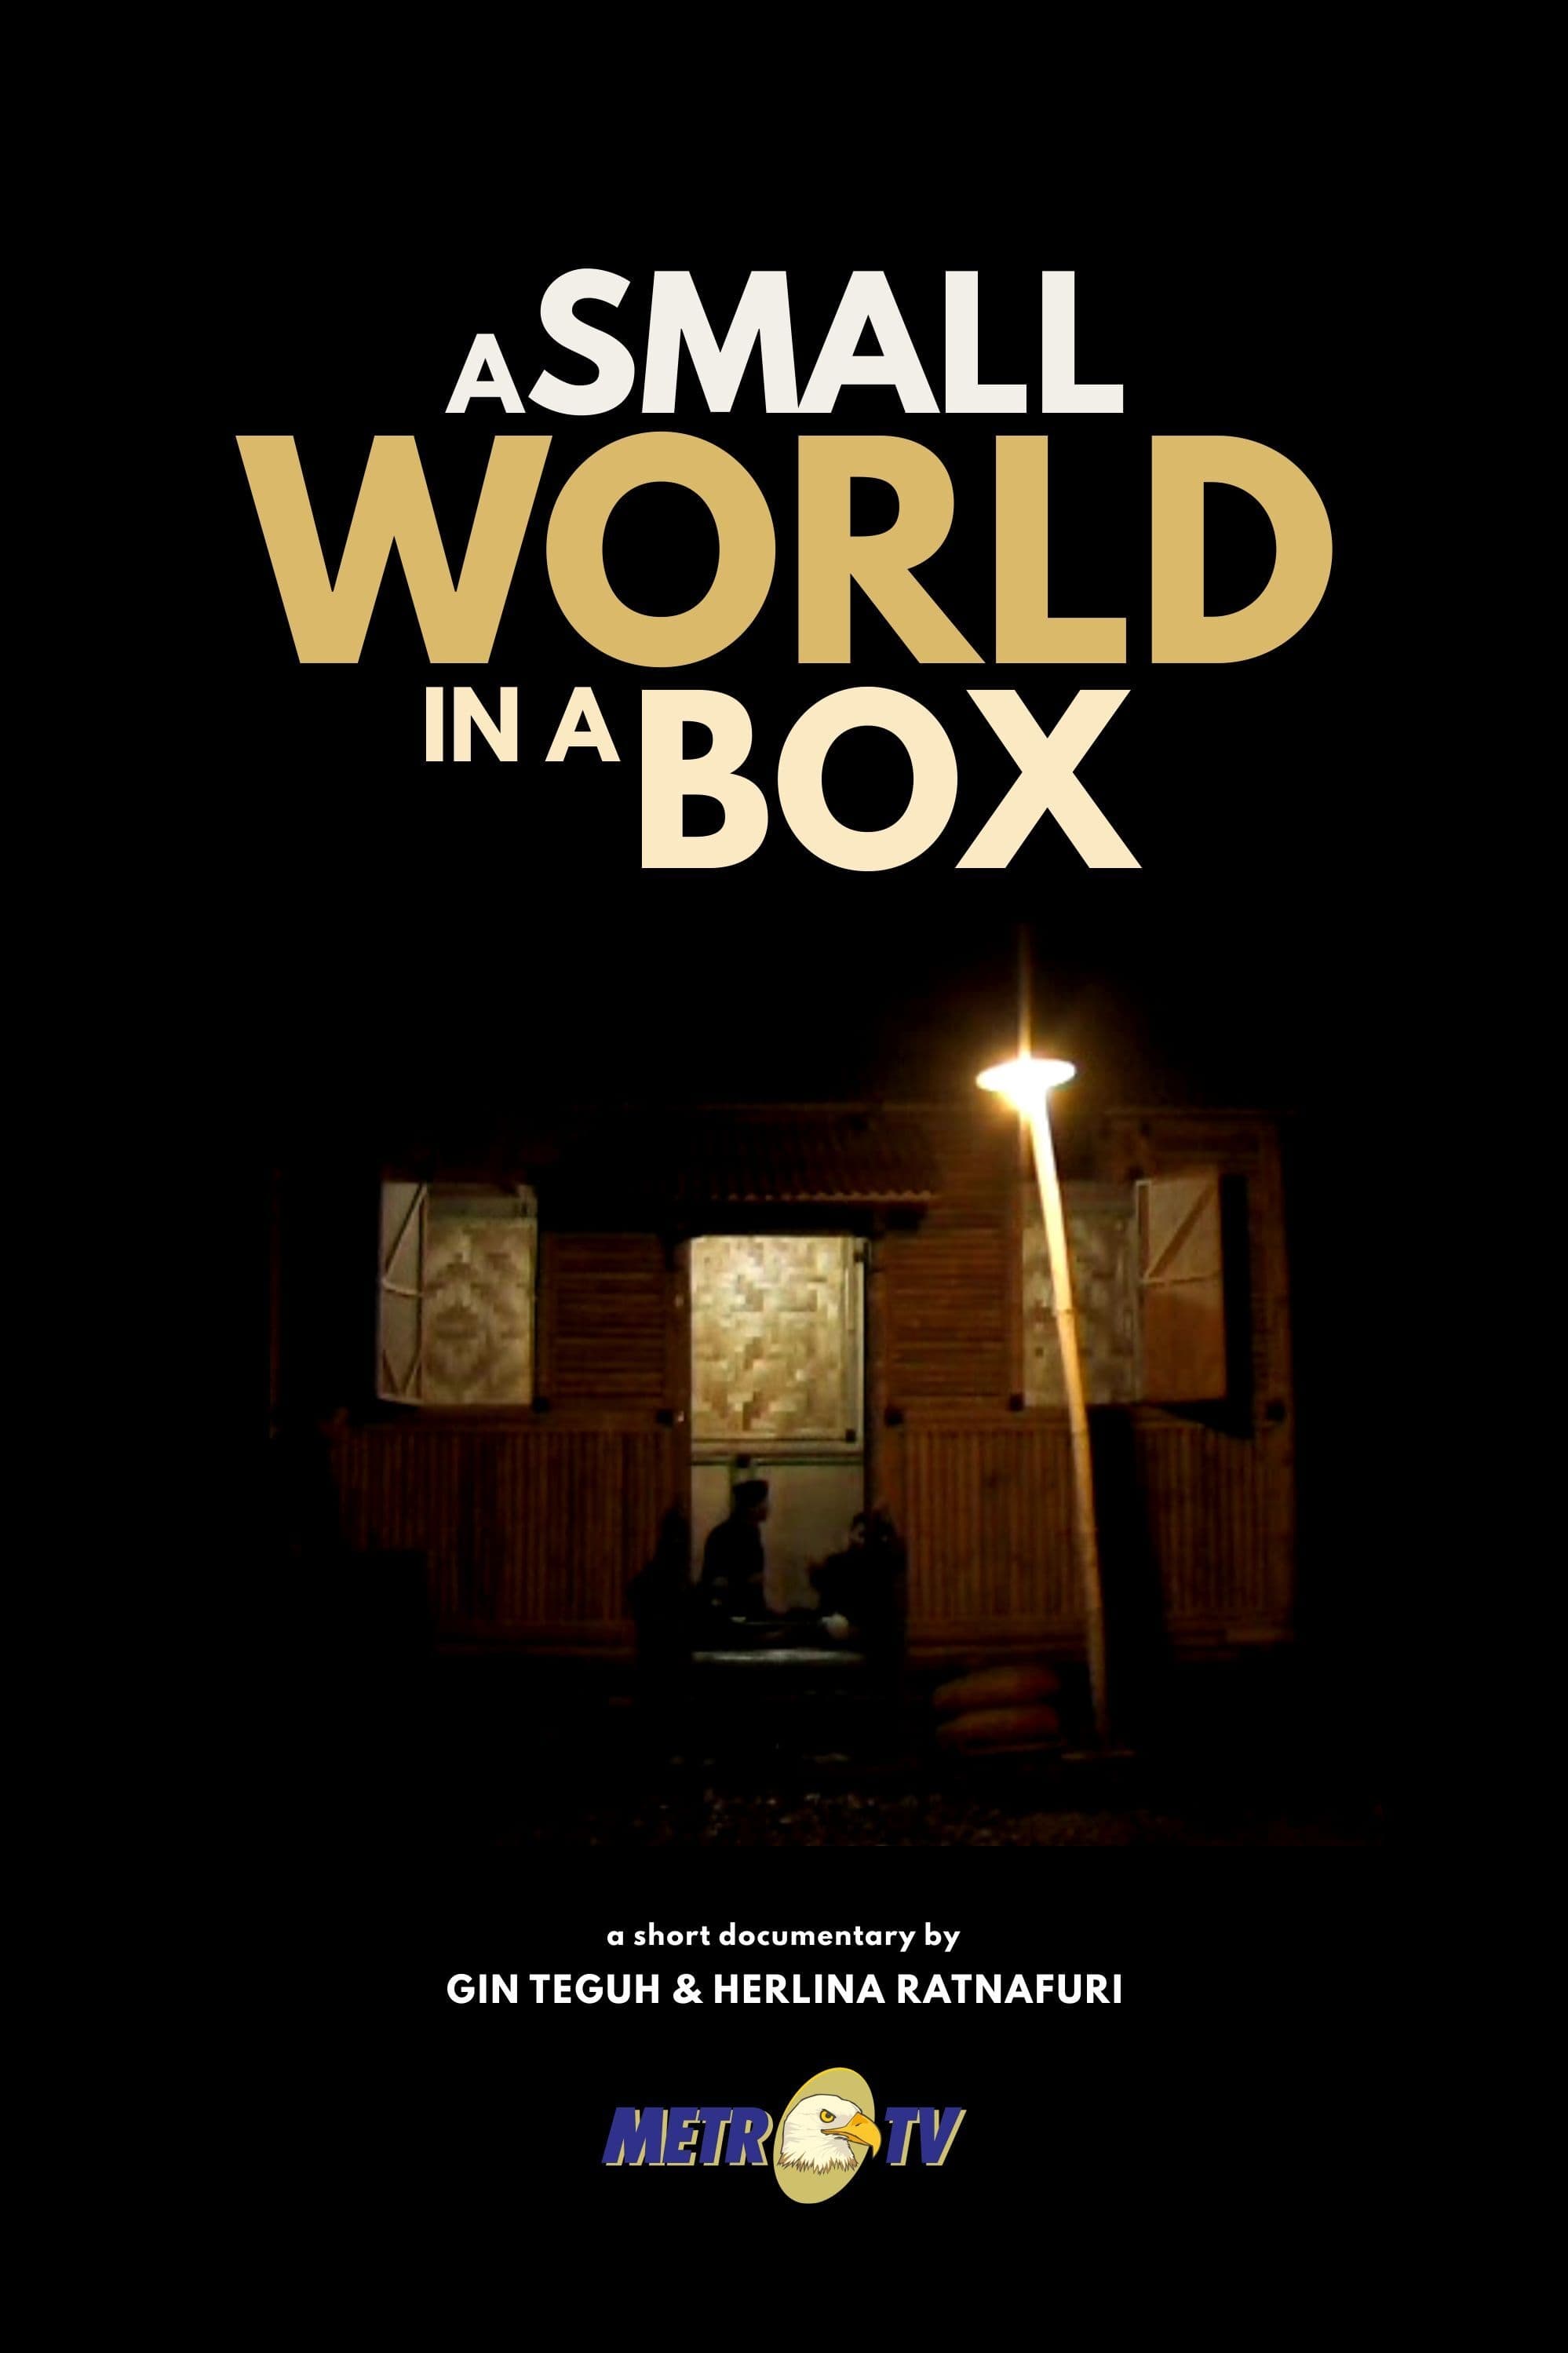 A Small World in a Box